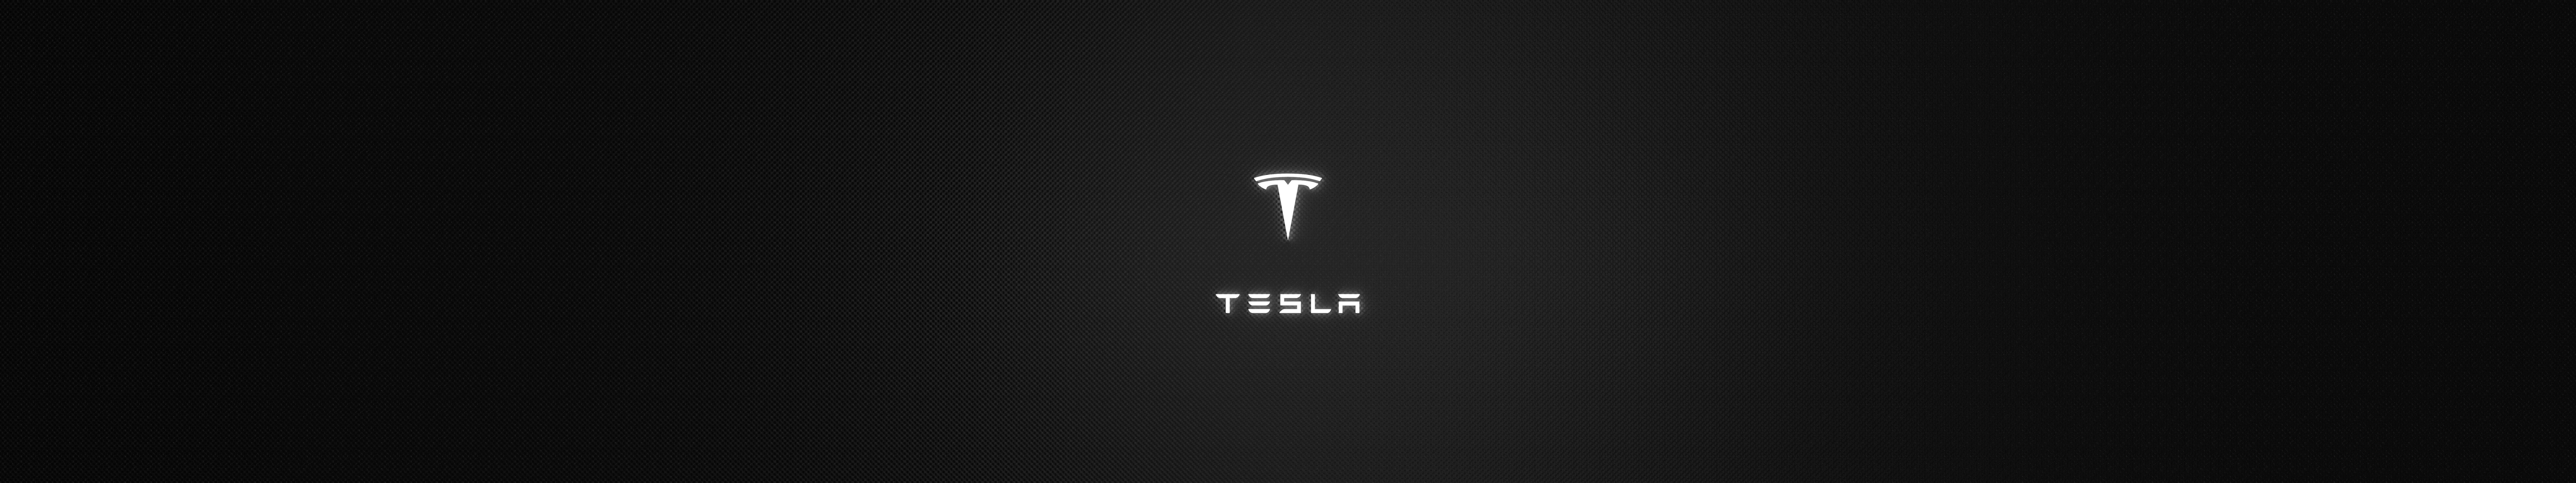 Tesla Black Triple Monitor